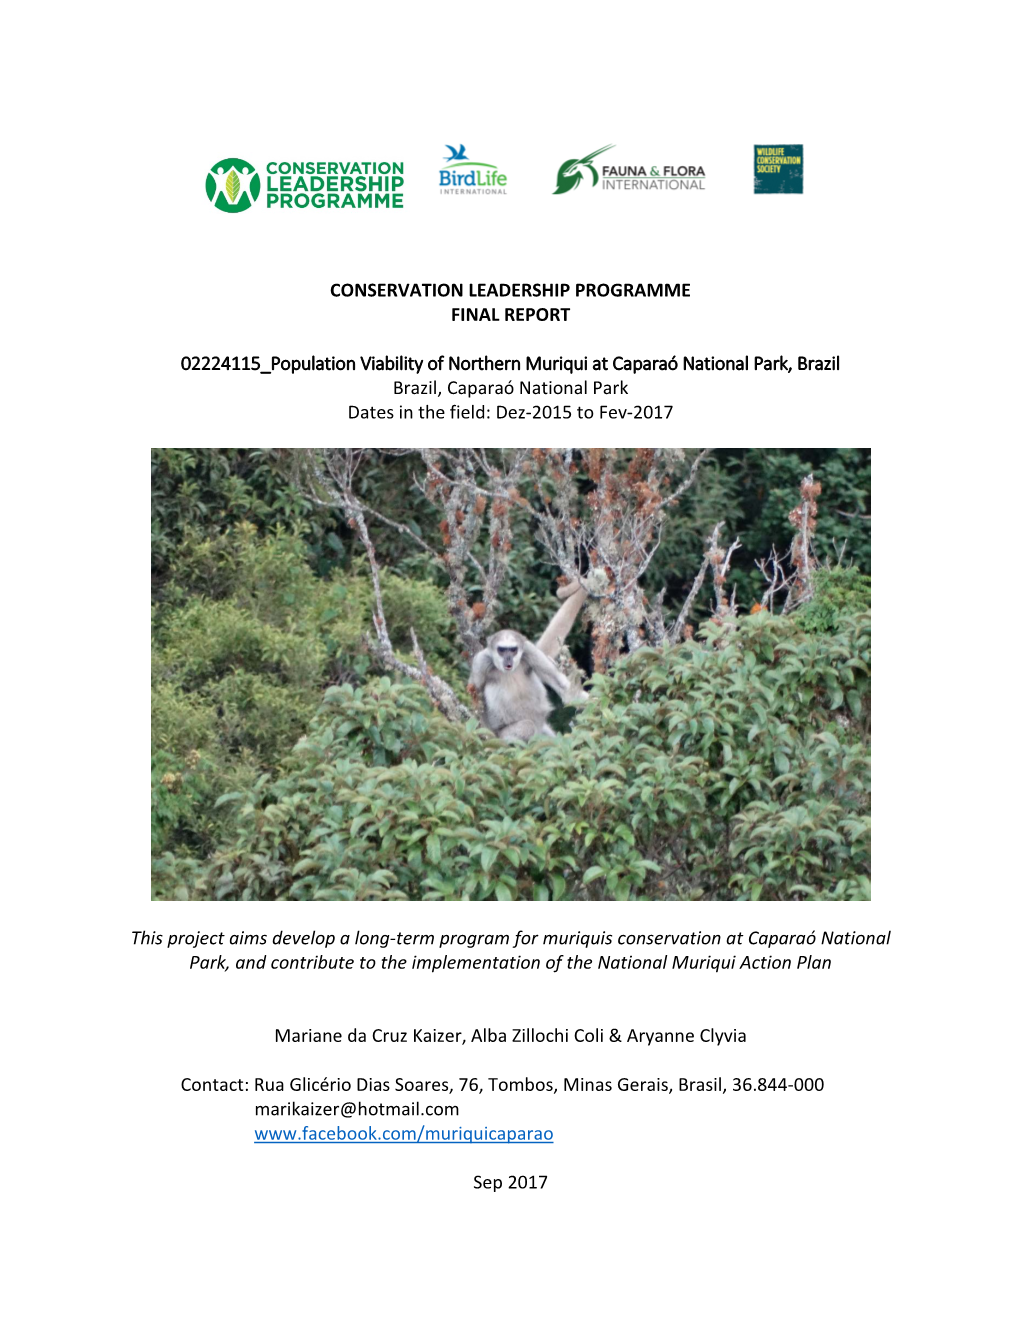 Conservation Leadership Programme Final Report